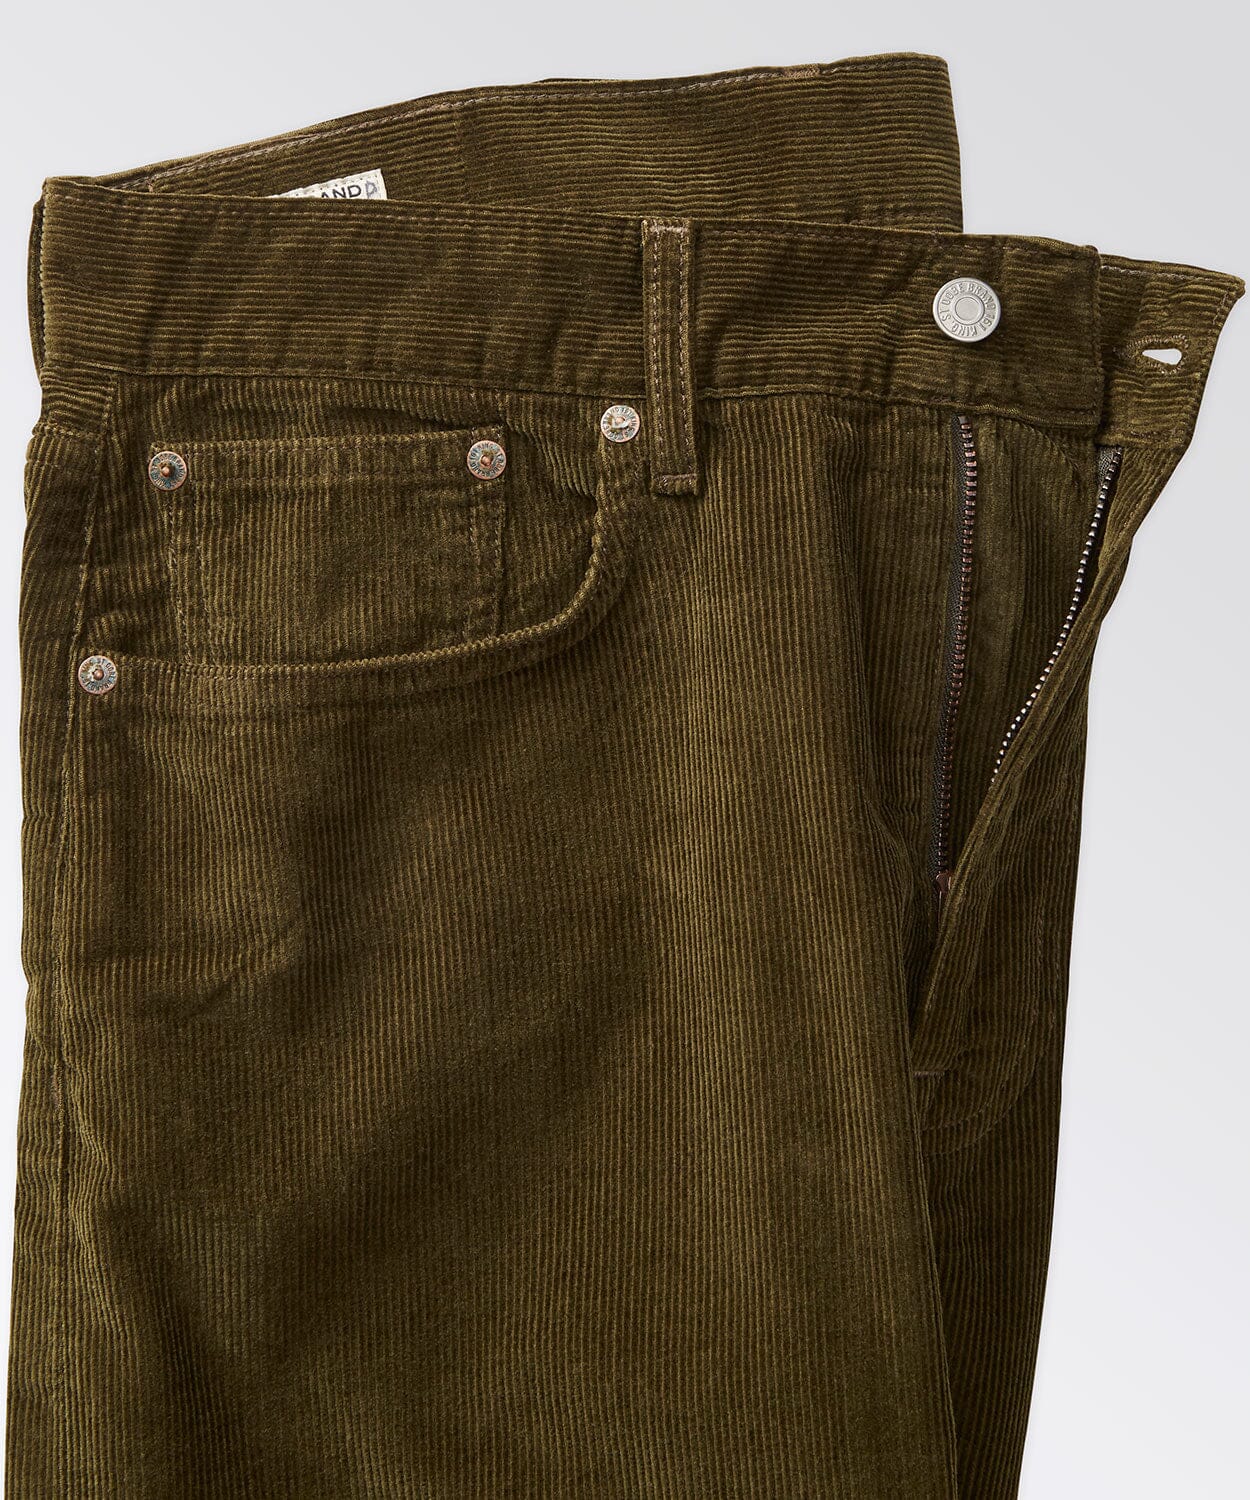 Cabril Corduroy 5-Pocket Pant Pants OOBE BRAND 